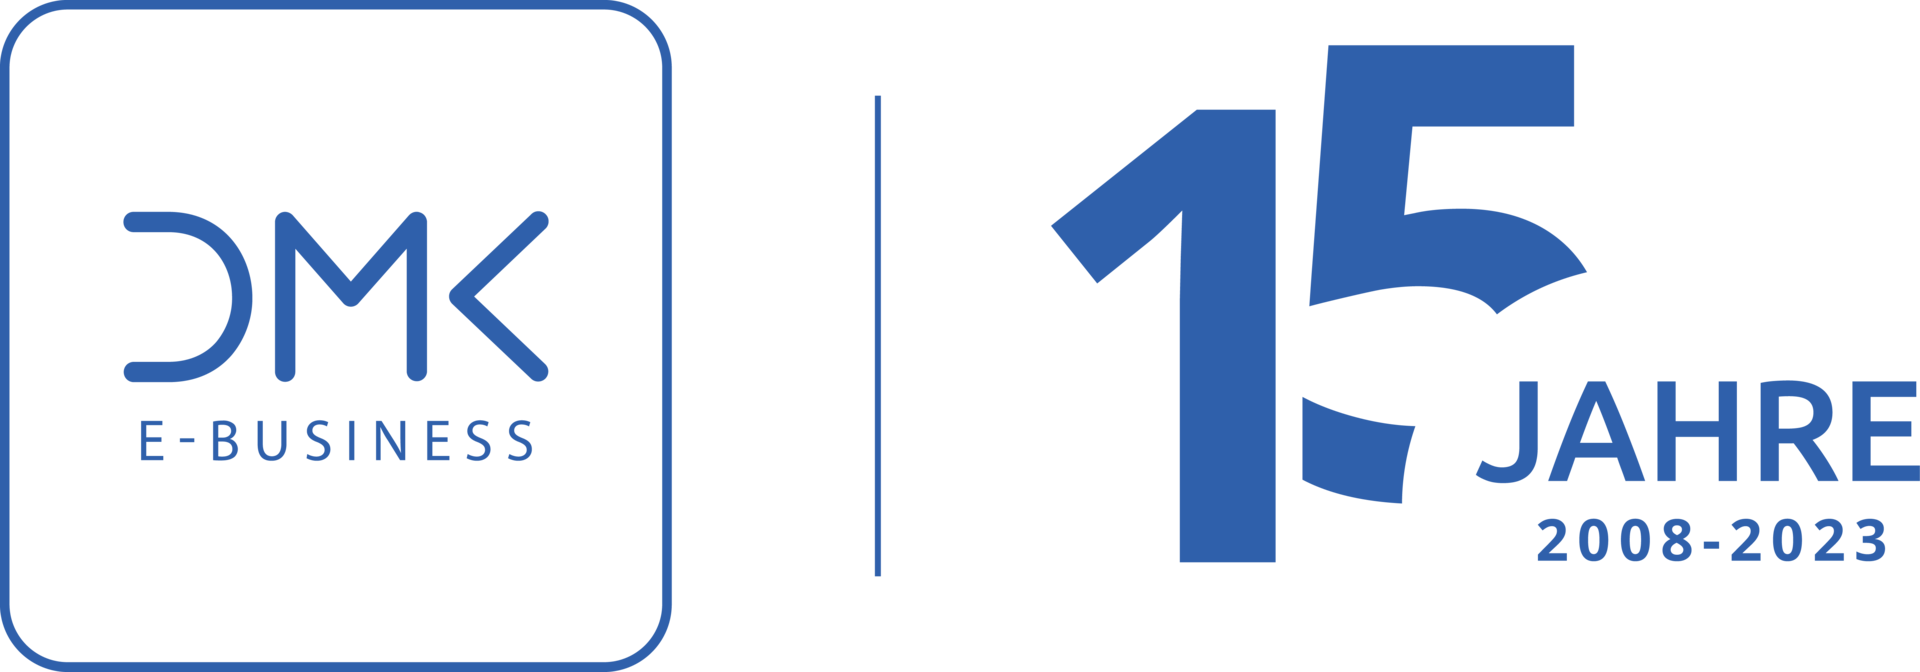 Logo zu 15 Jahren DMK E-BUSINESS